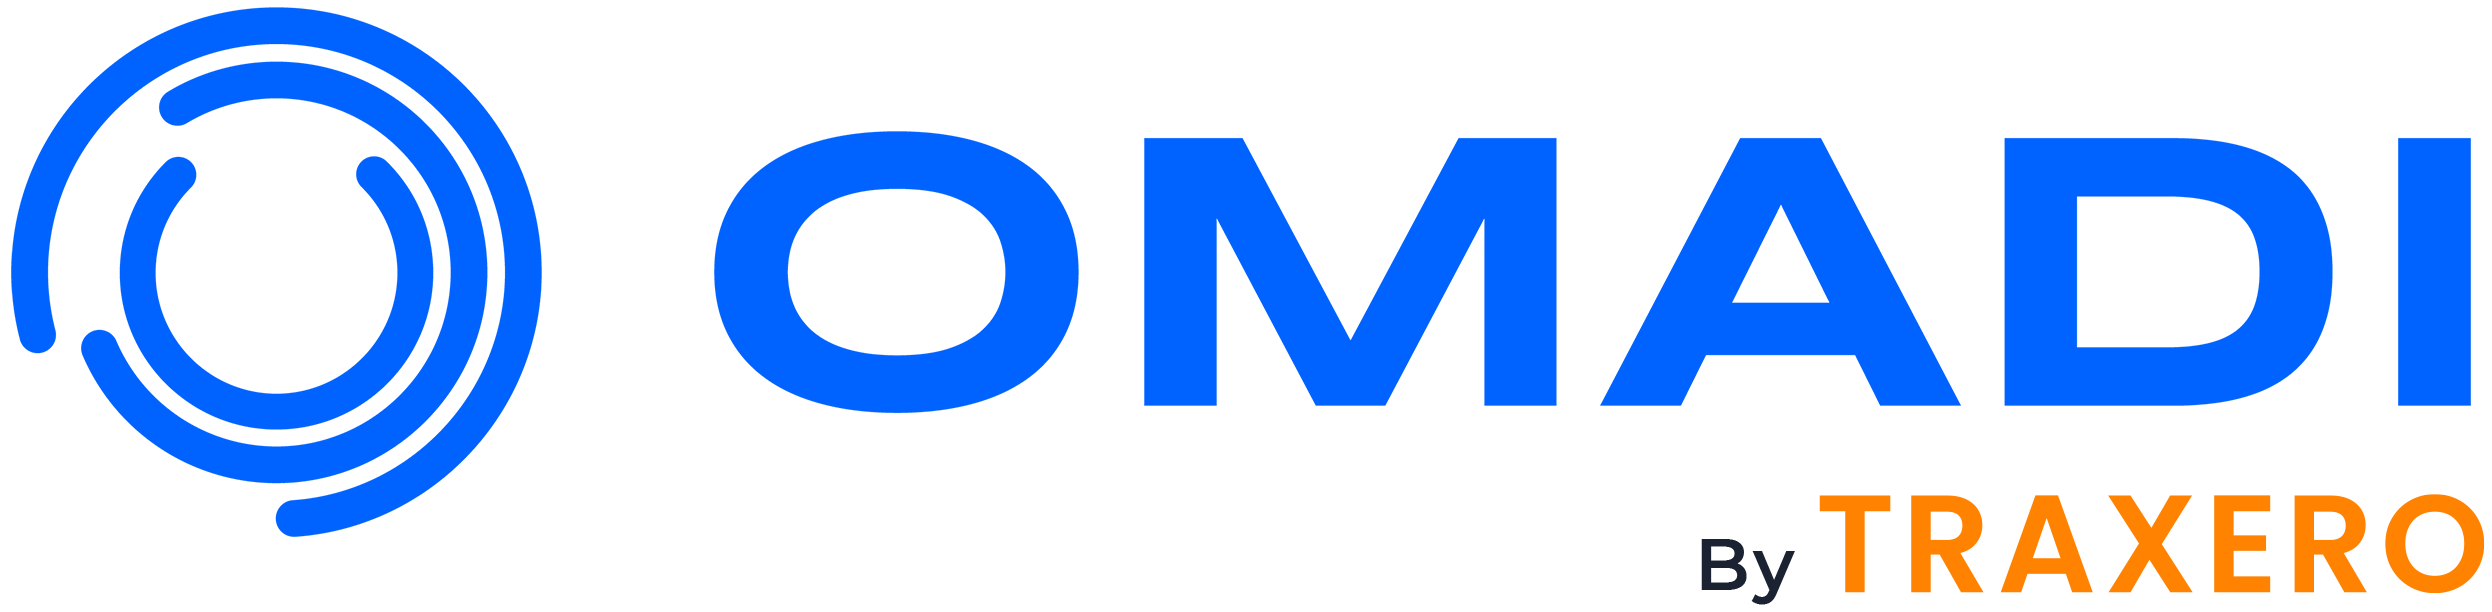 Omadi Logo